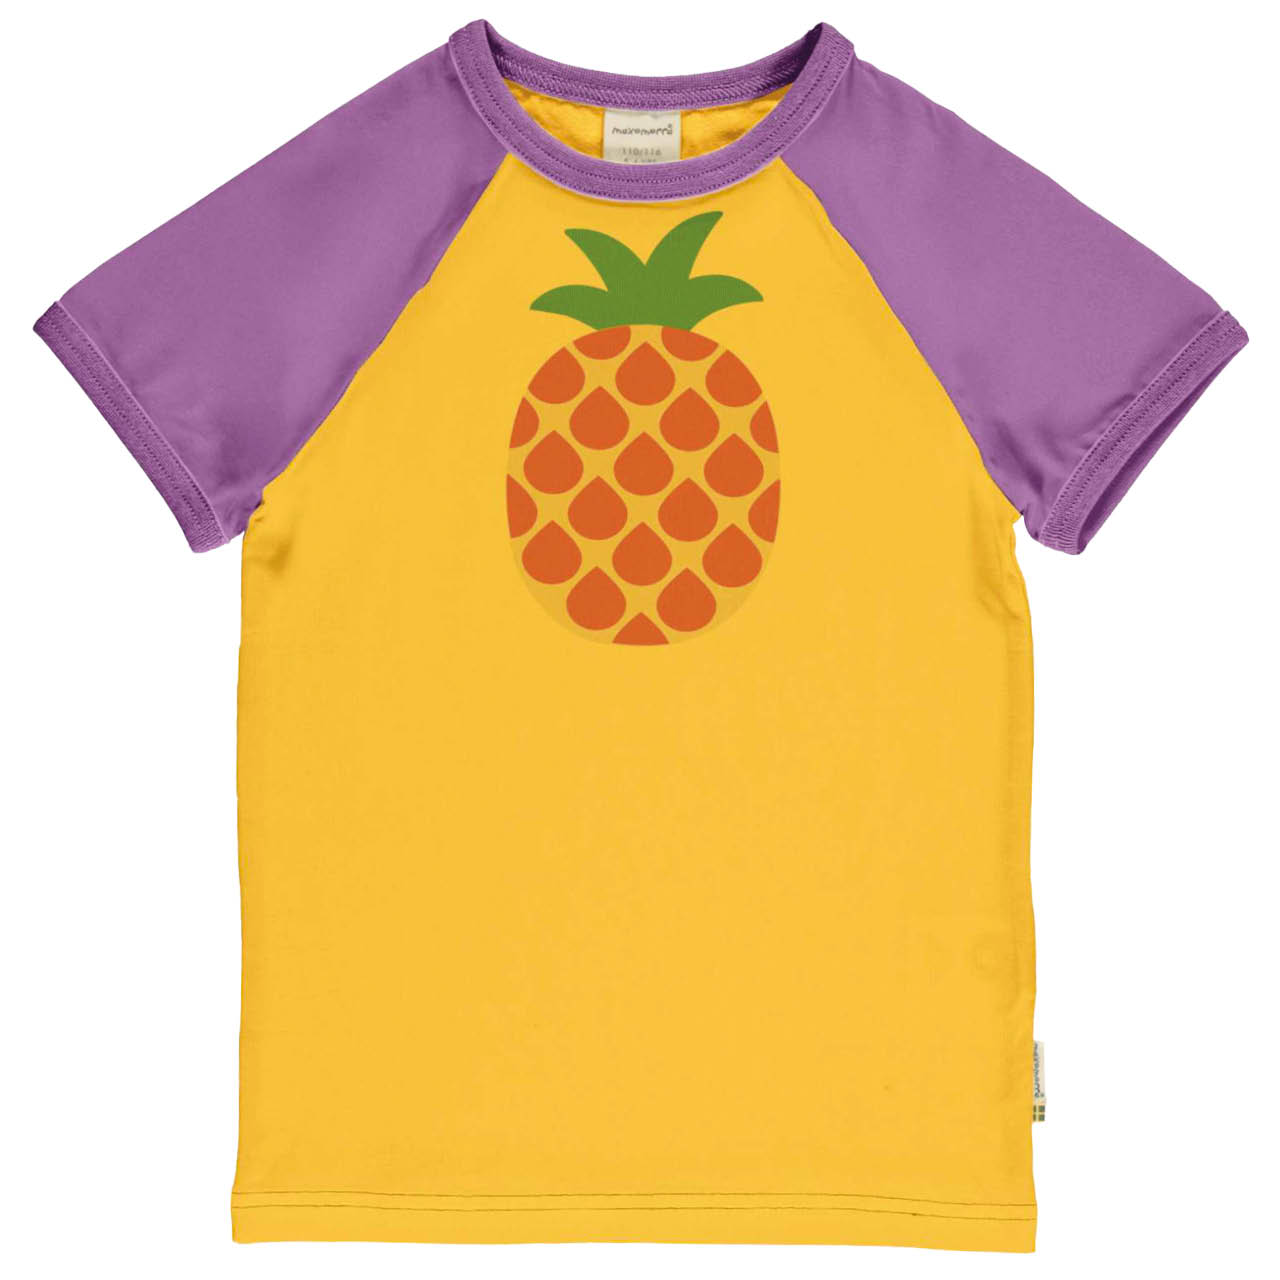 Weiches Raglan T-Shirt Ananas gelb